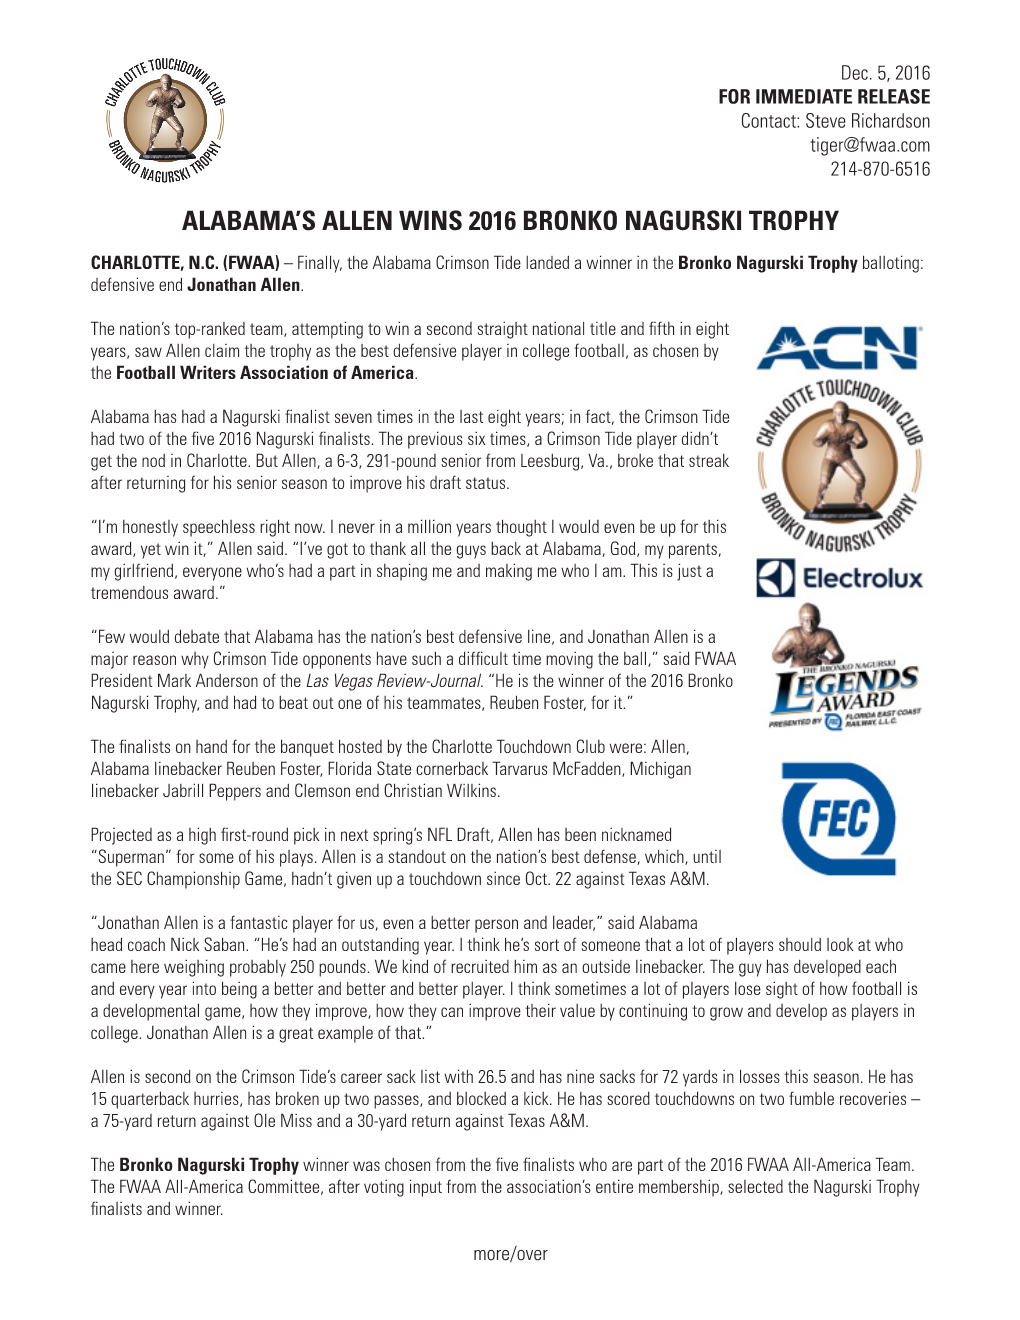 Alabama's Allen Wins 2016 Bronko Nagurski Trophy